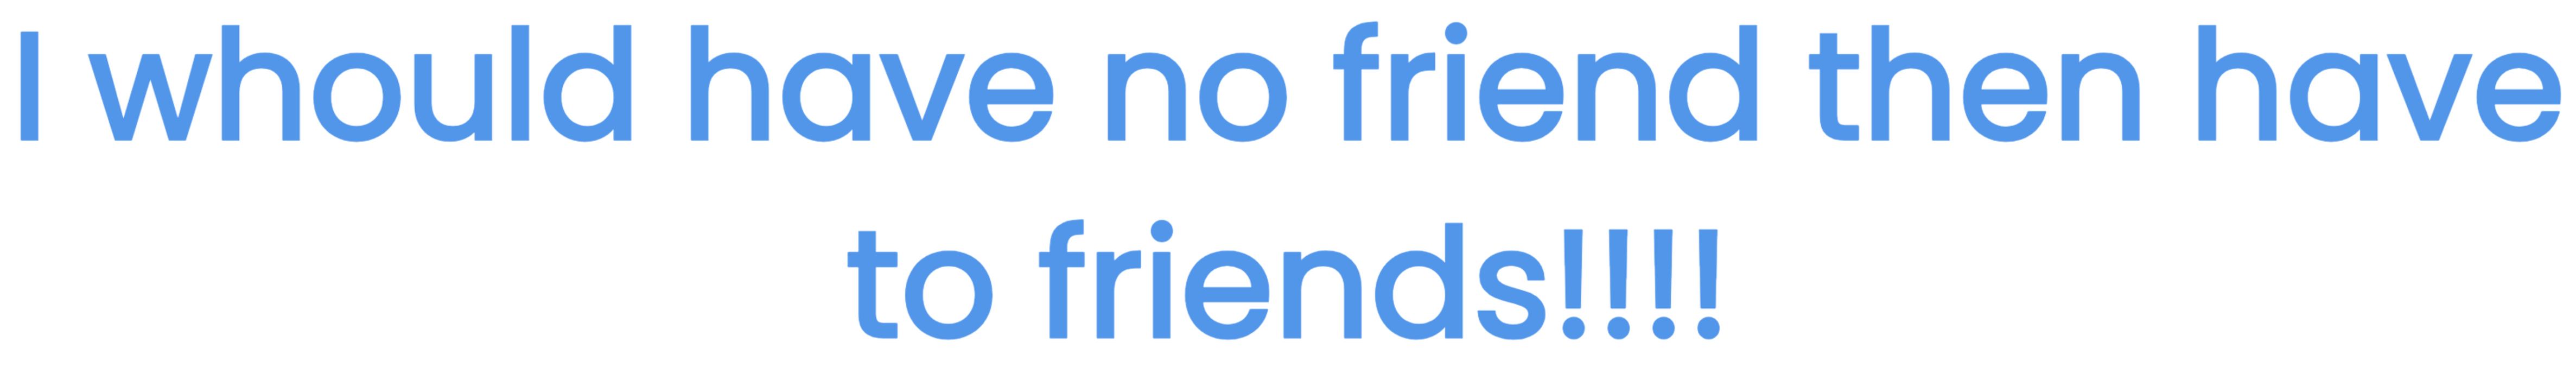 fake friends or no friends